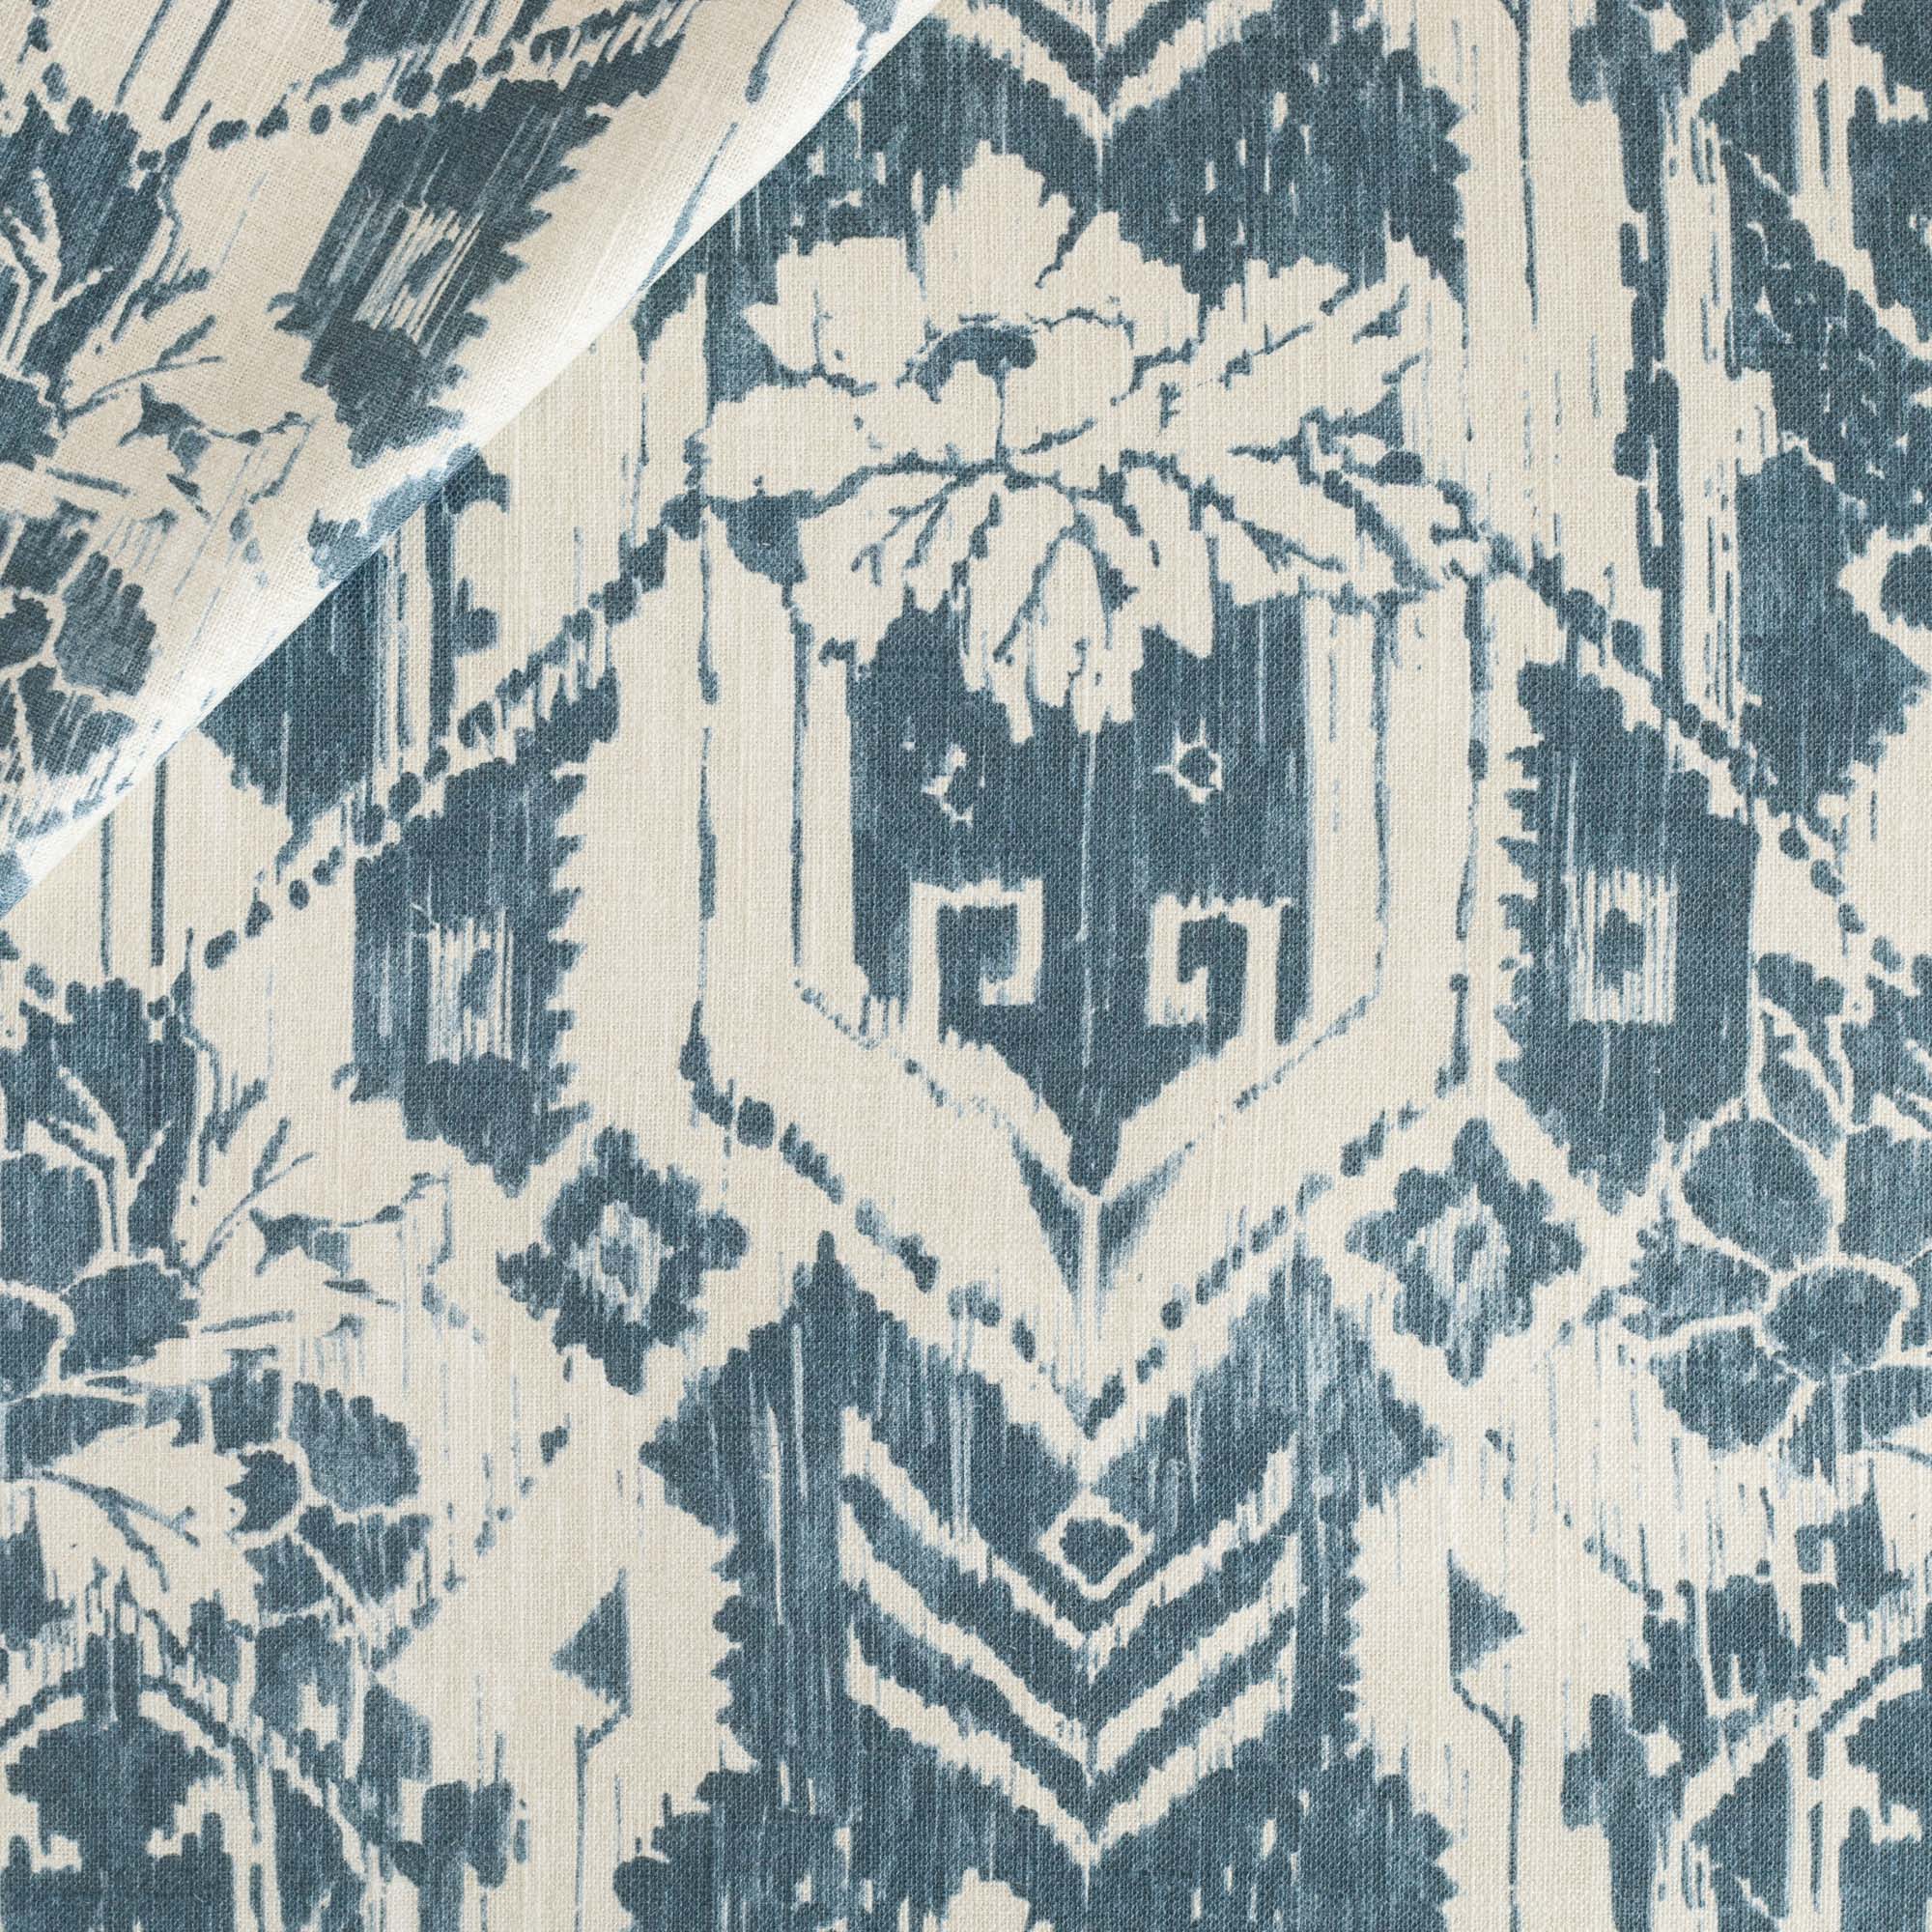 Merida, a cream and blue botanical ikat print fabric from Tonic Living